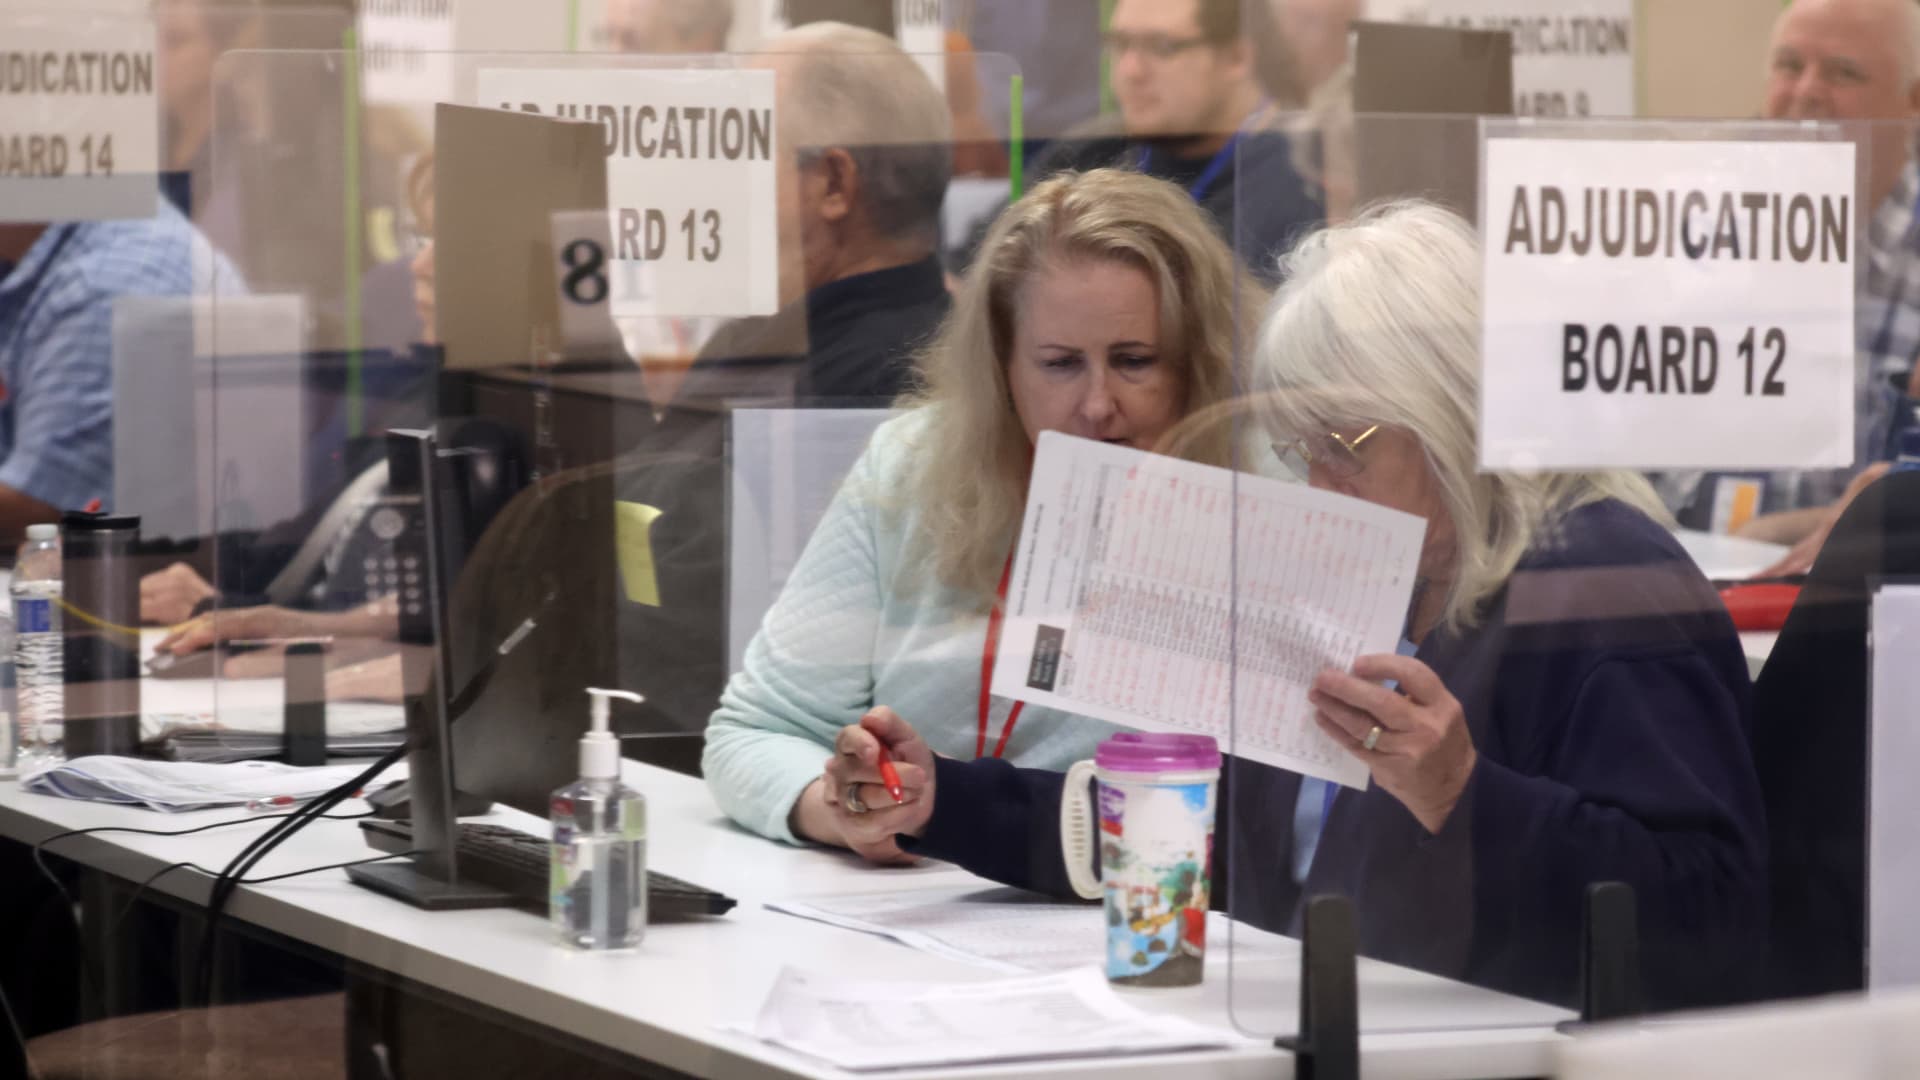 An adjudication board reviews ballots at the Maricopa County Tabulation and Election Center on November 07, 2022 in Phoenix, Arizona.